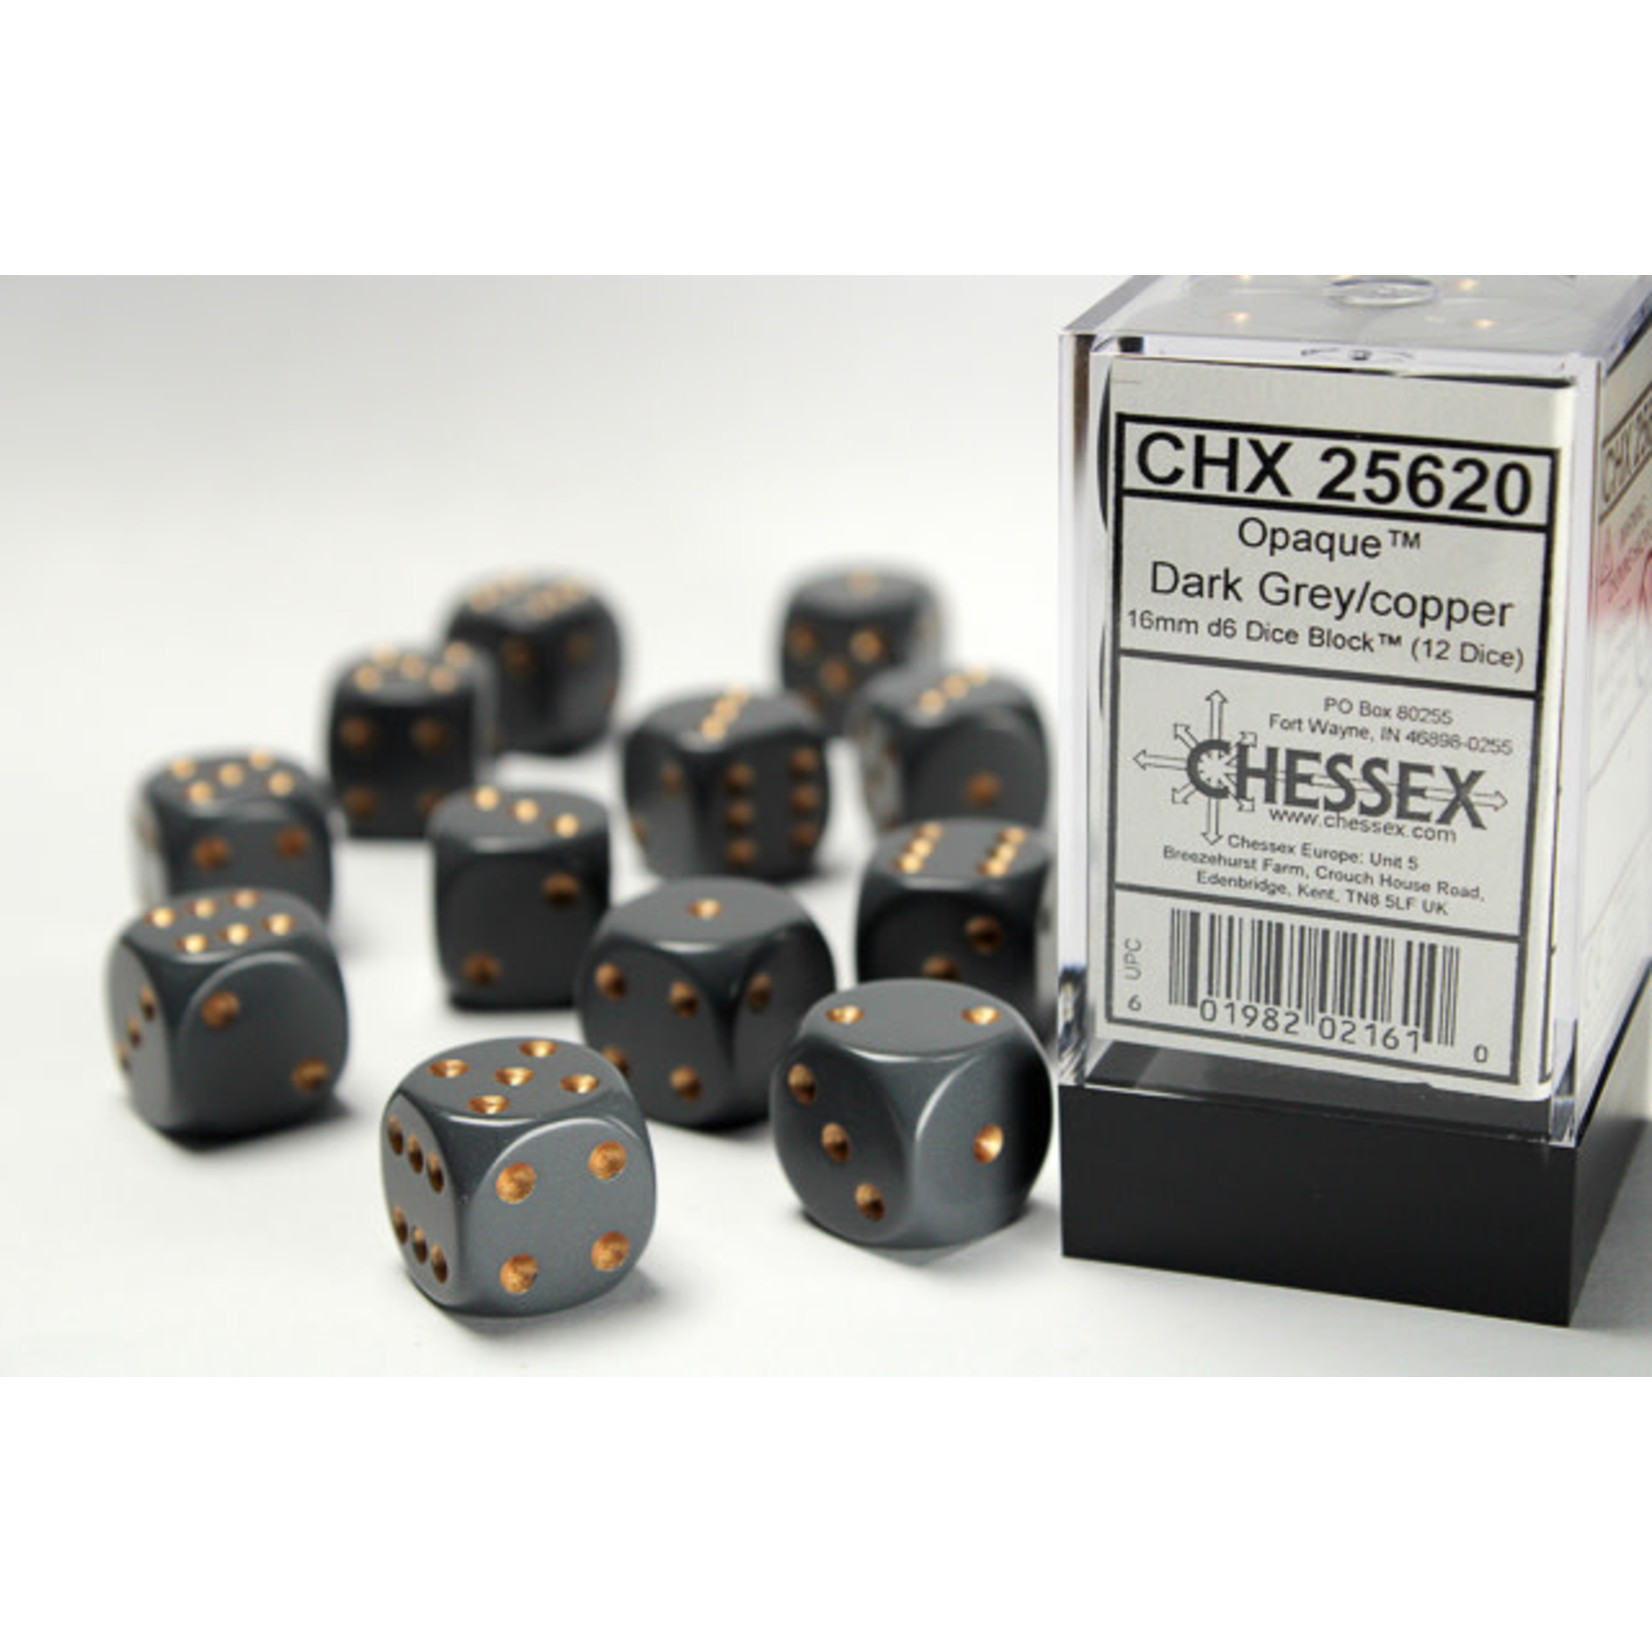 Chessex 25620 Opaque 12pc Dark Grey/Copper Dice